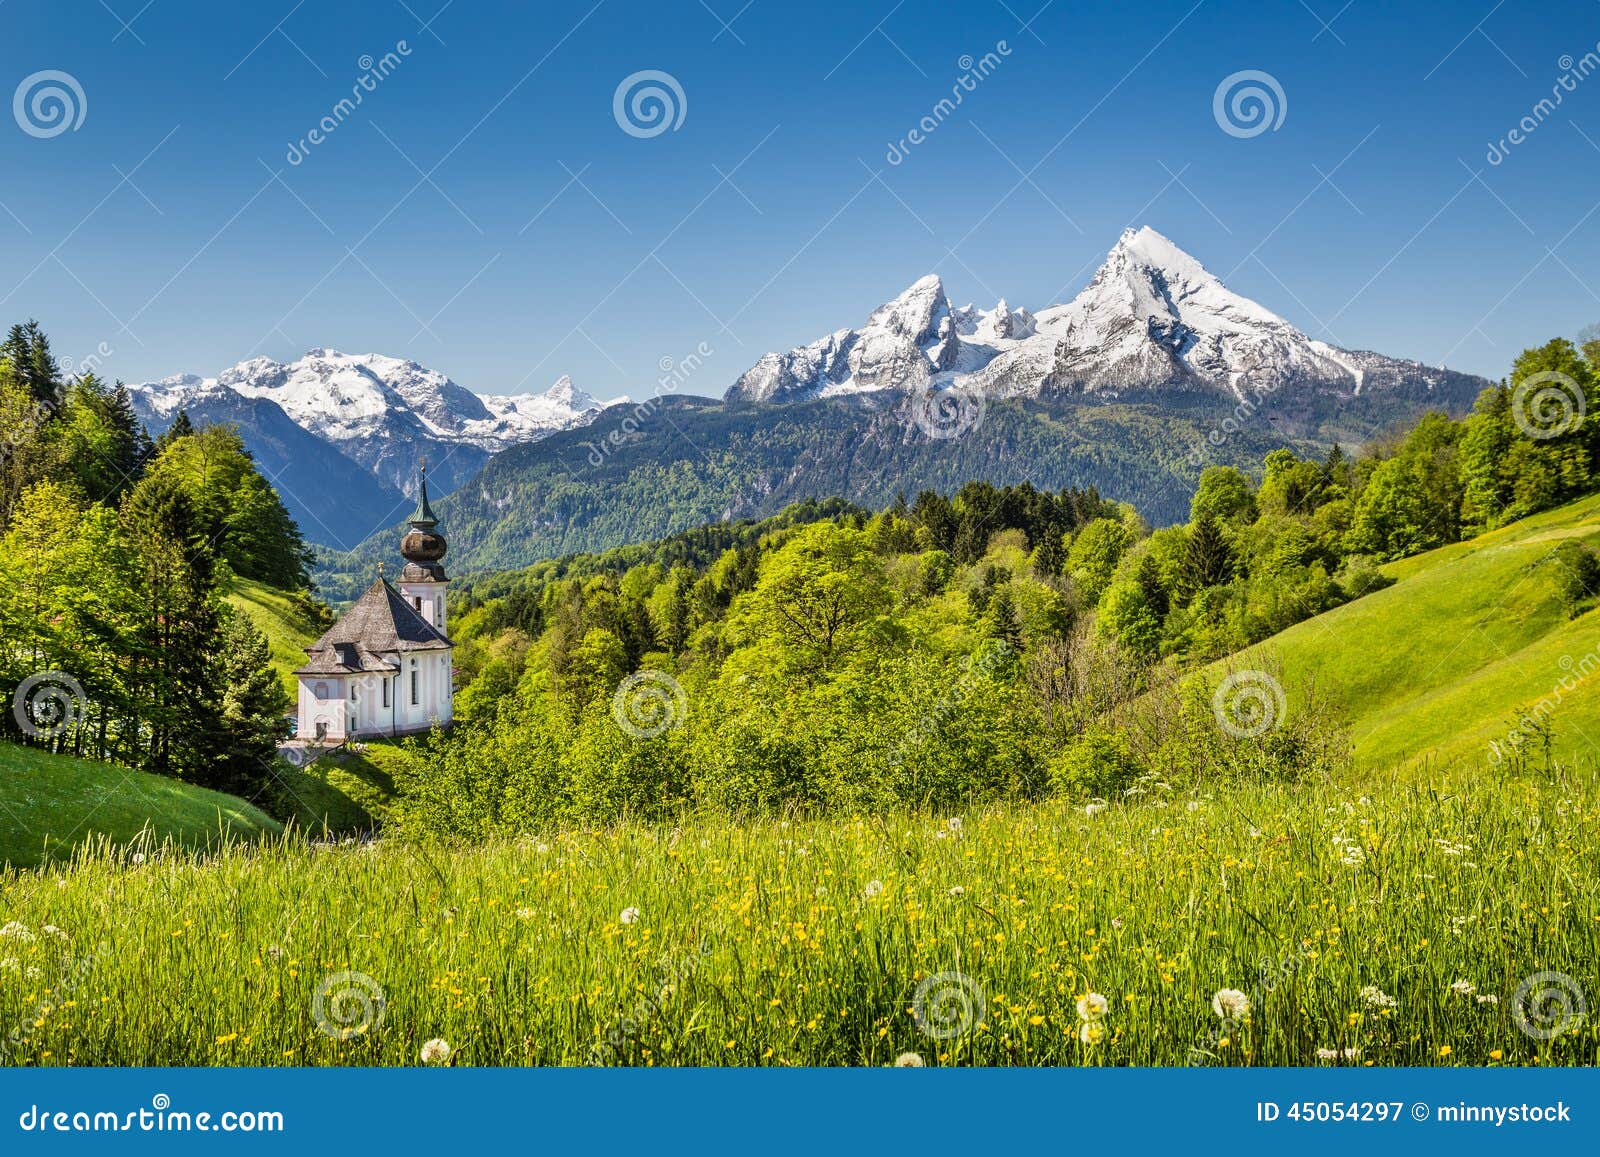 idyllic mountain landscape in the bavarian alps, berchtesgadener land, germany